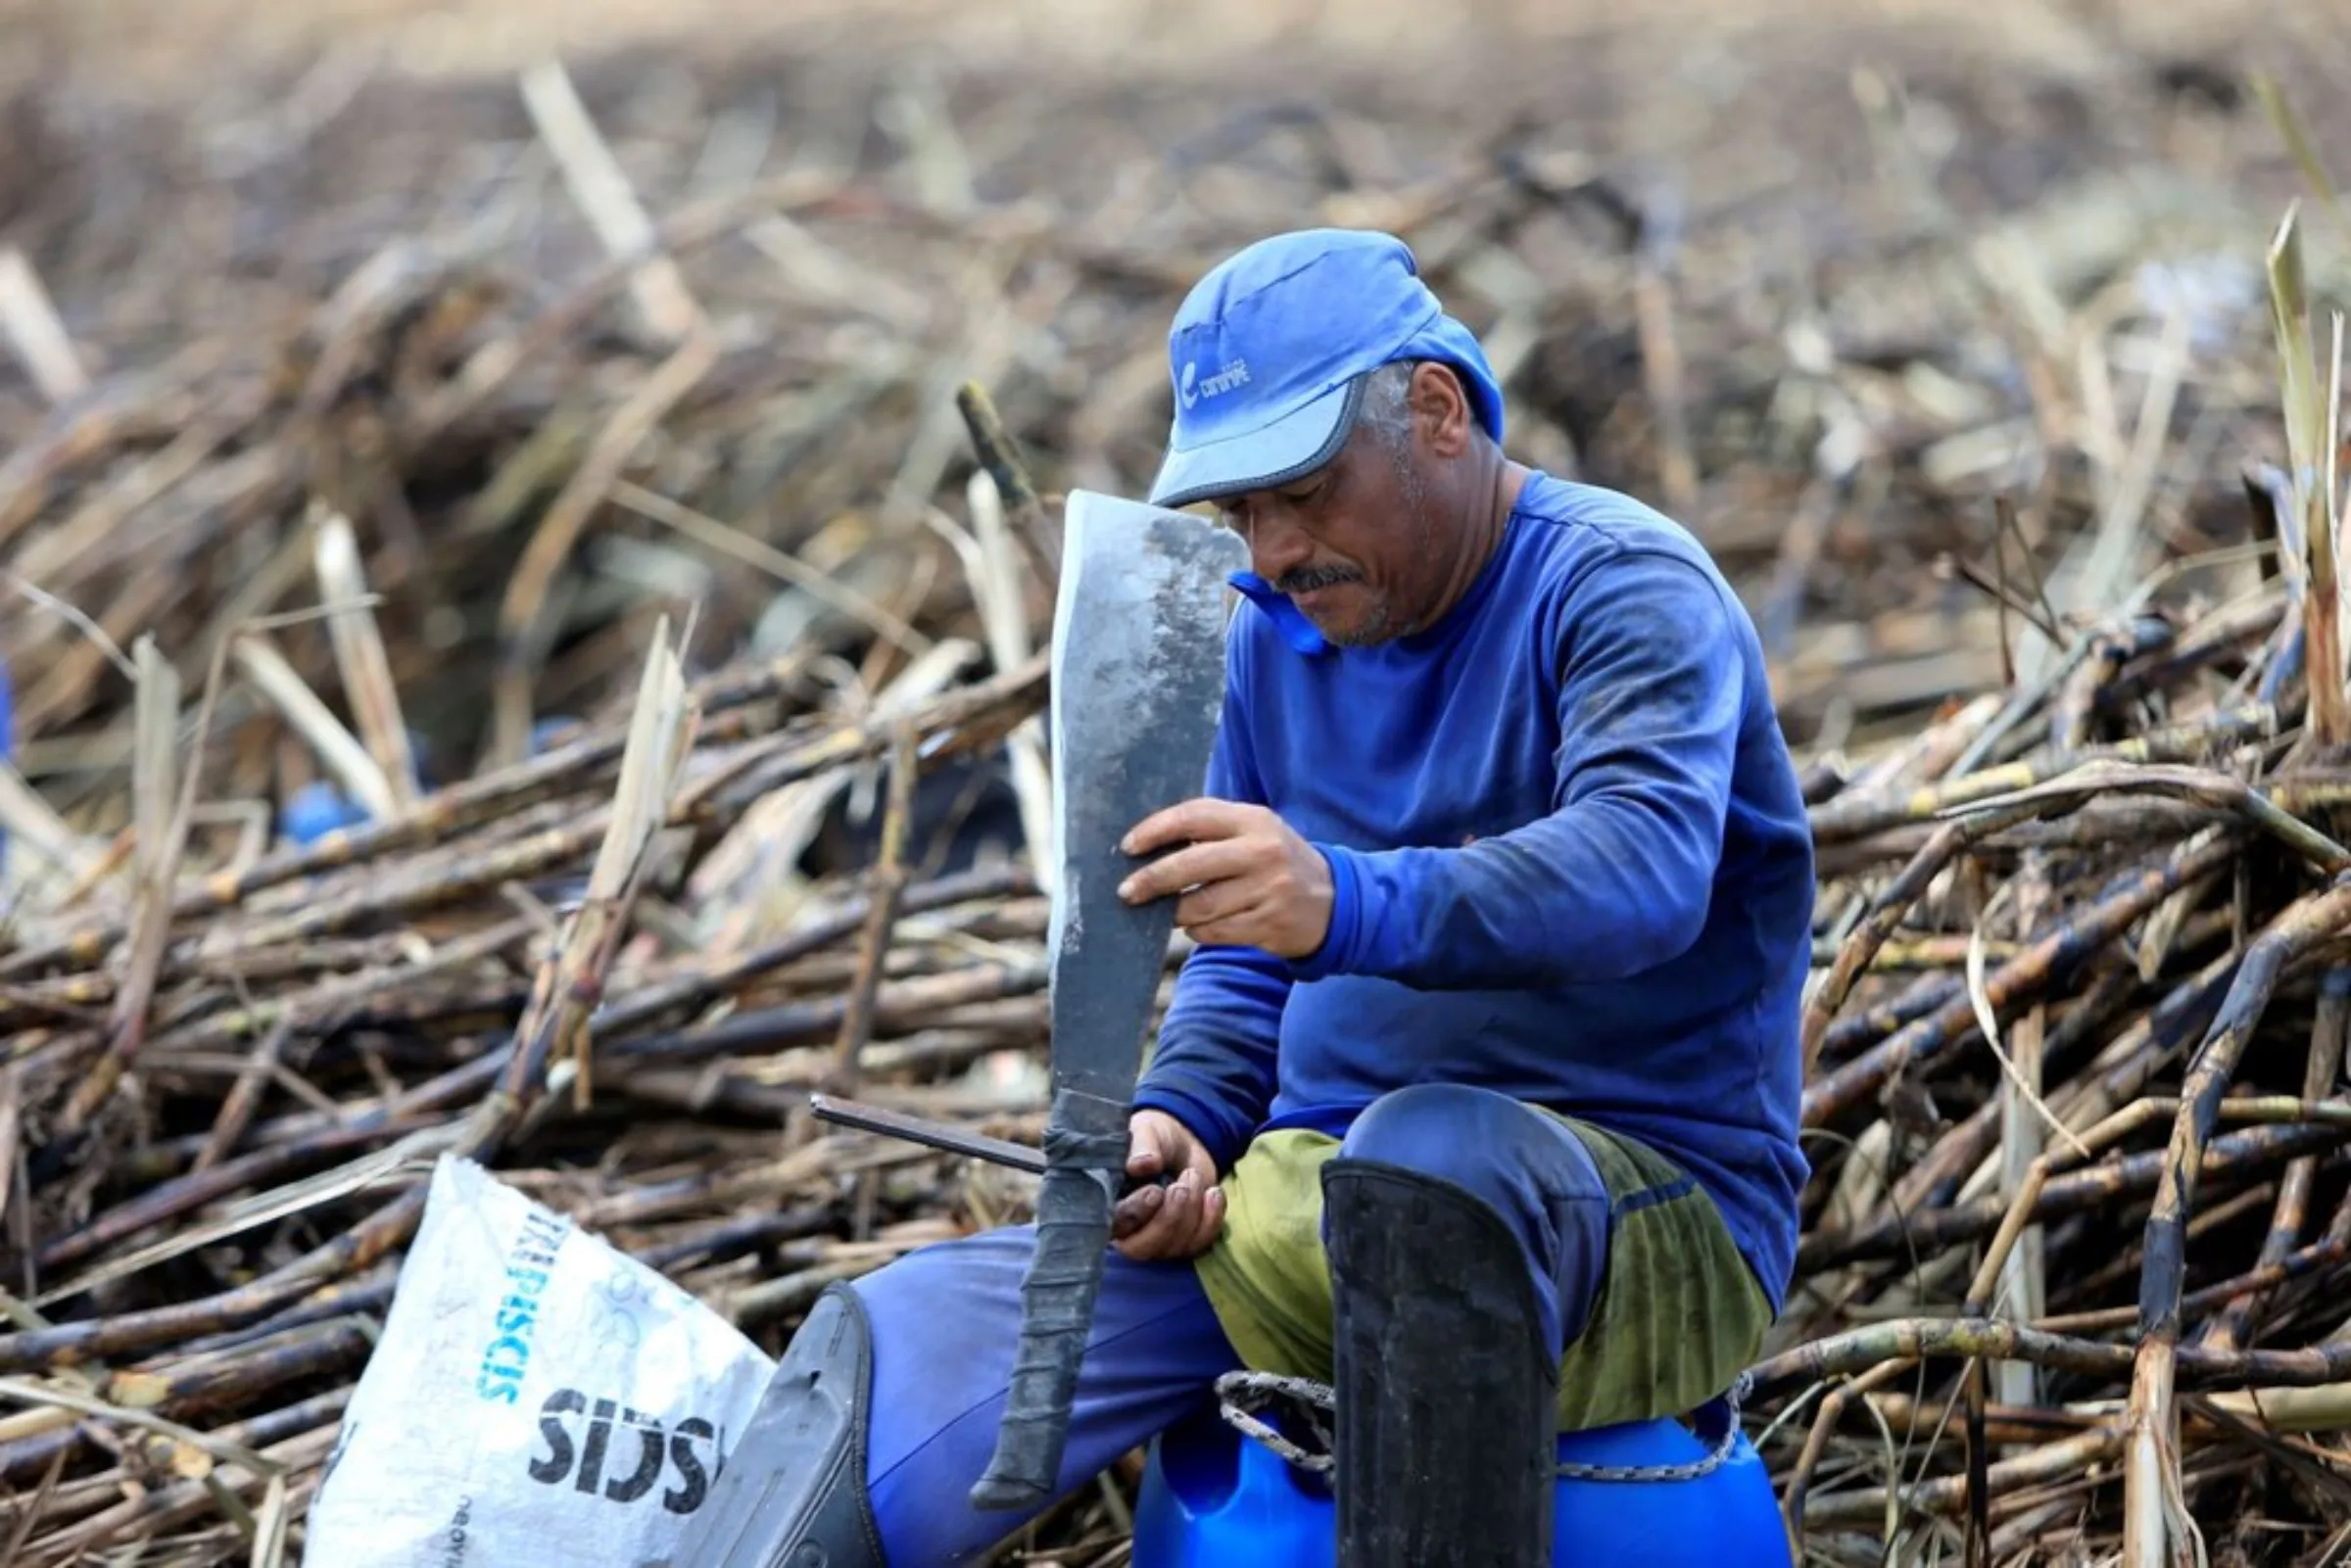 A sugarcane worker sharpens his machete in a plantation near Maceio, Brazil, on September 27, 2021